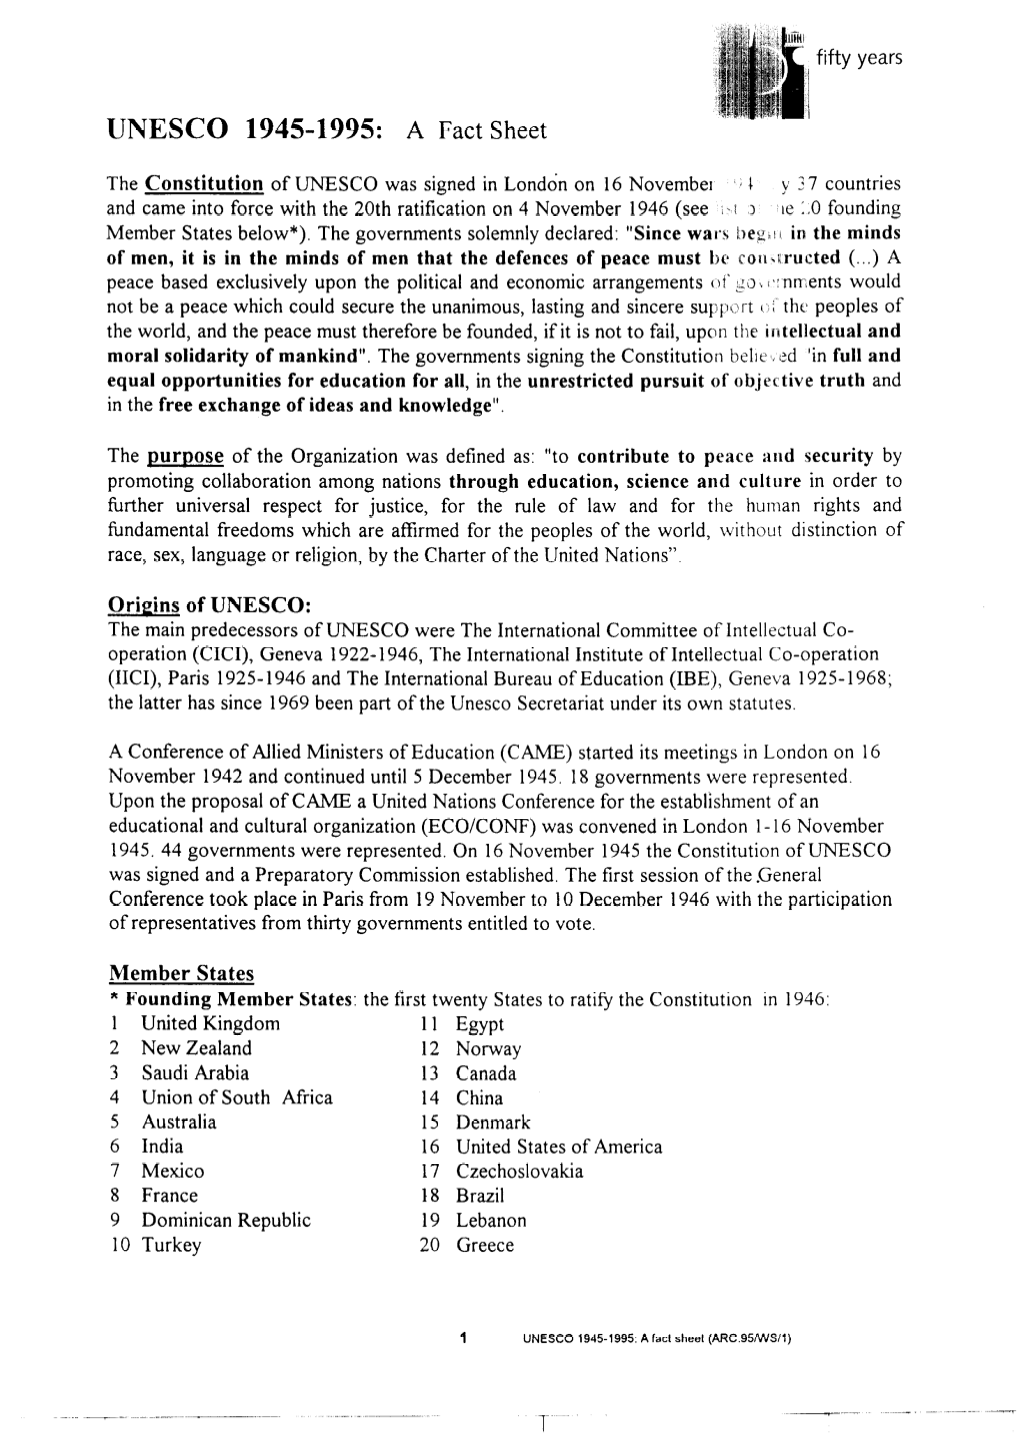 UNESCO, 1945-1995: a Fact Sheet; 1995